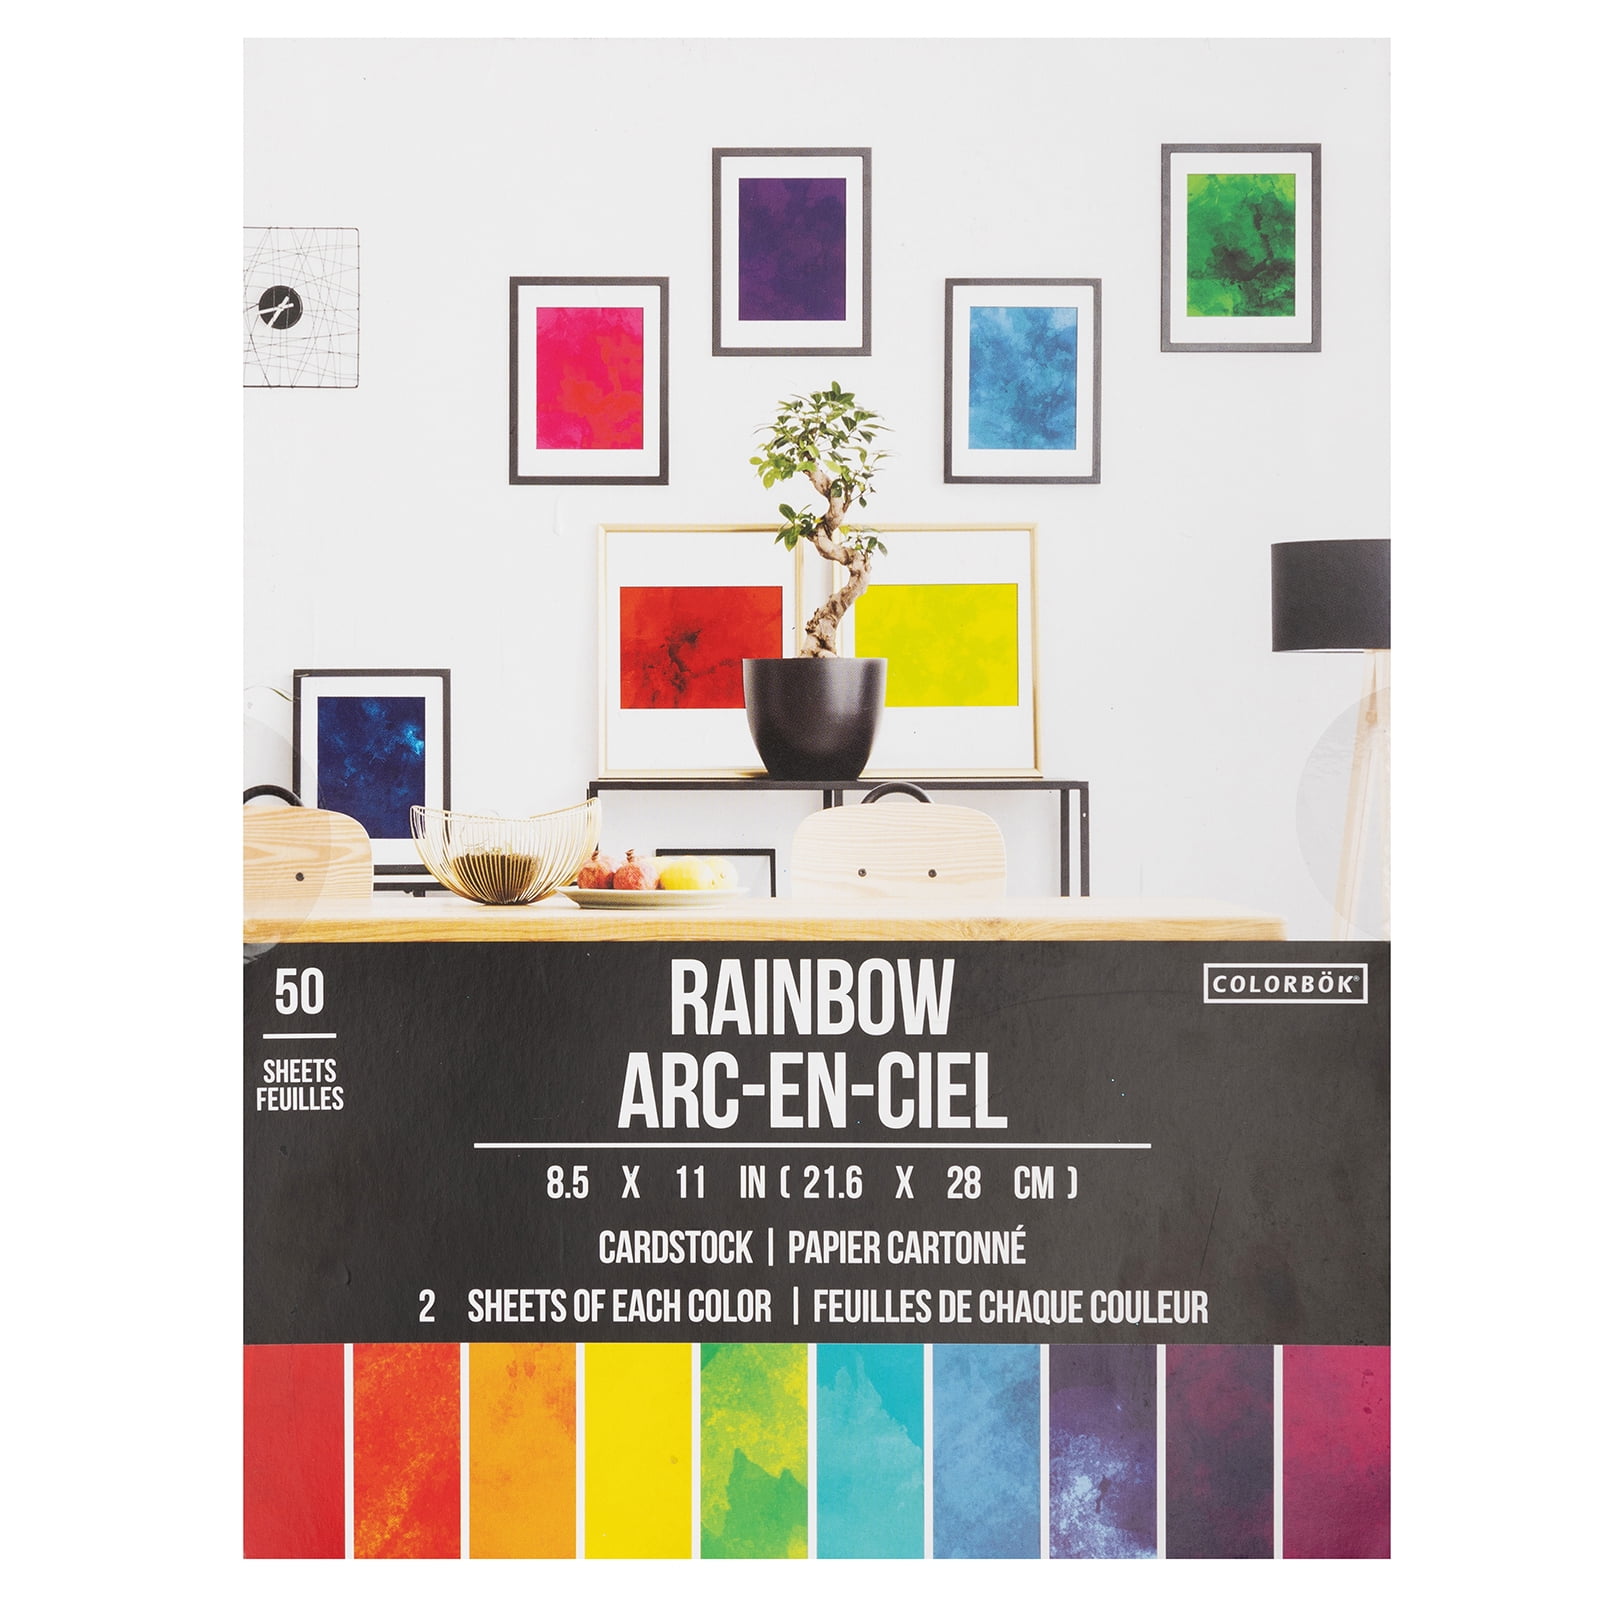 Colorbok Watercolor Rainbow Cardstock Paper Pad, 50 Sheets.